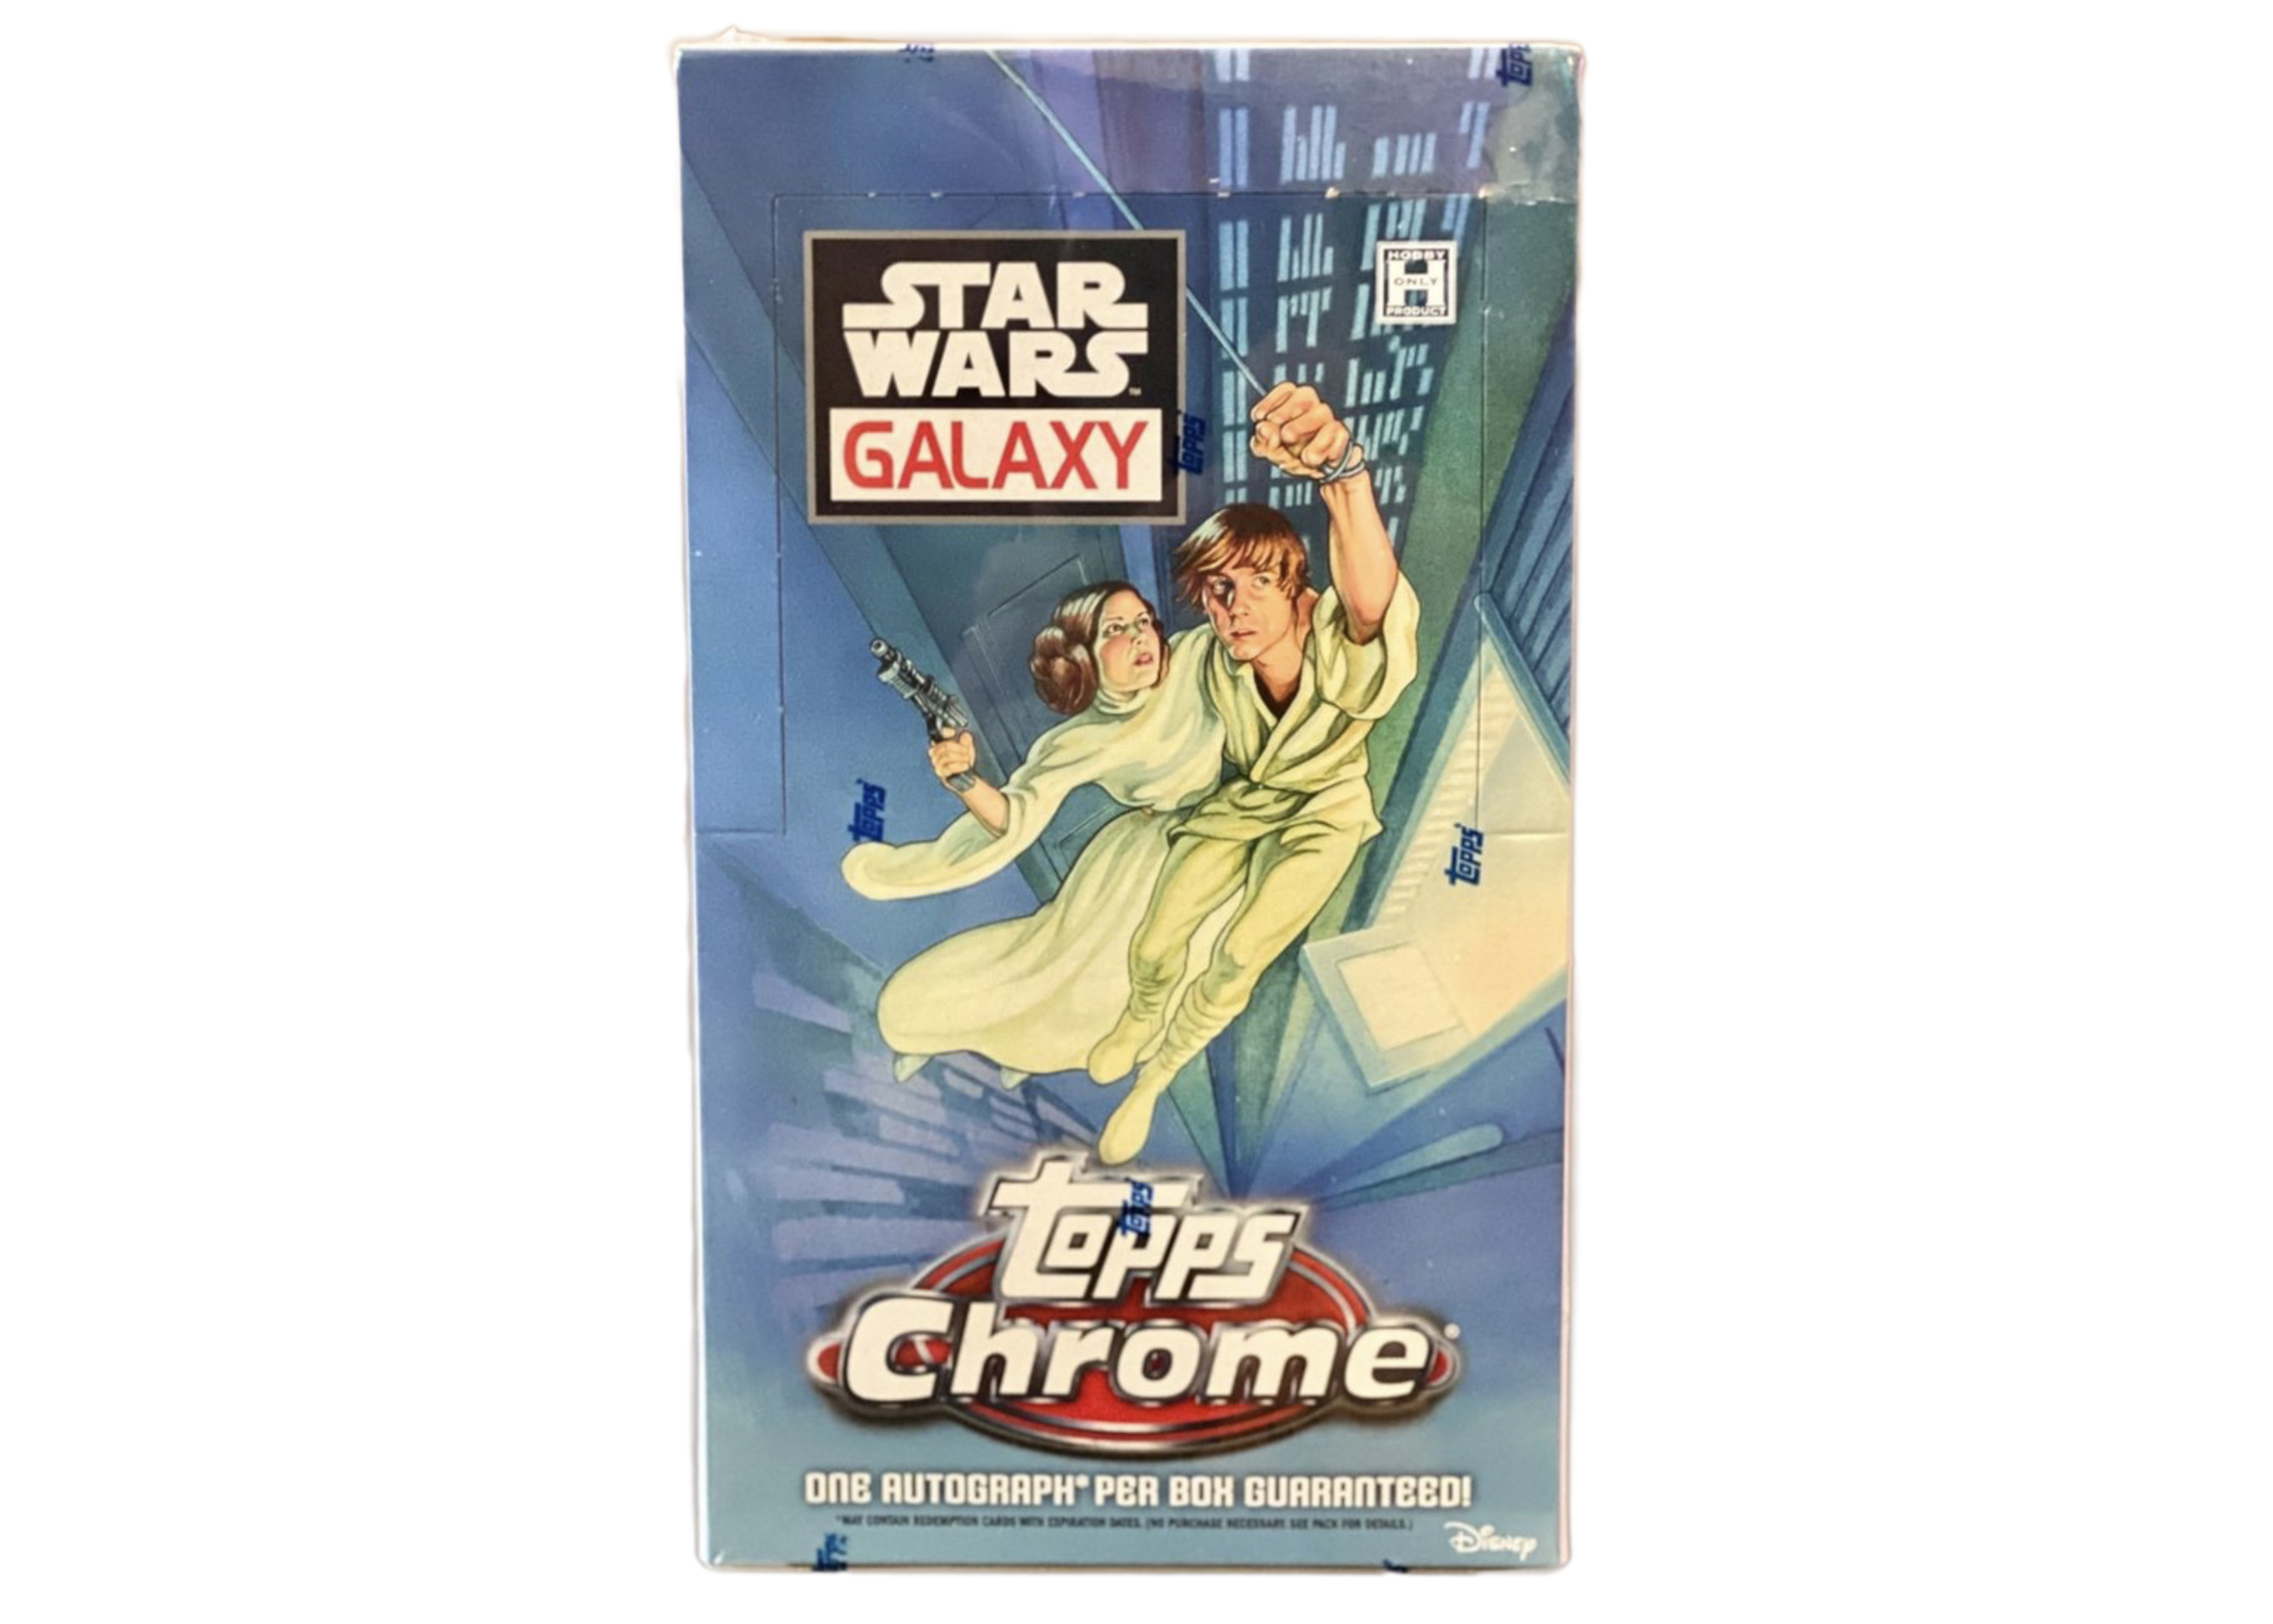 2021 Topps Chrome Star Wars Galaxy Hobby Box